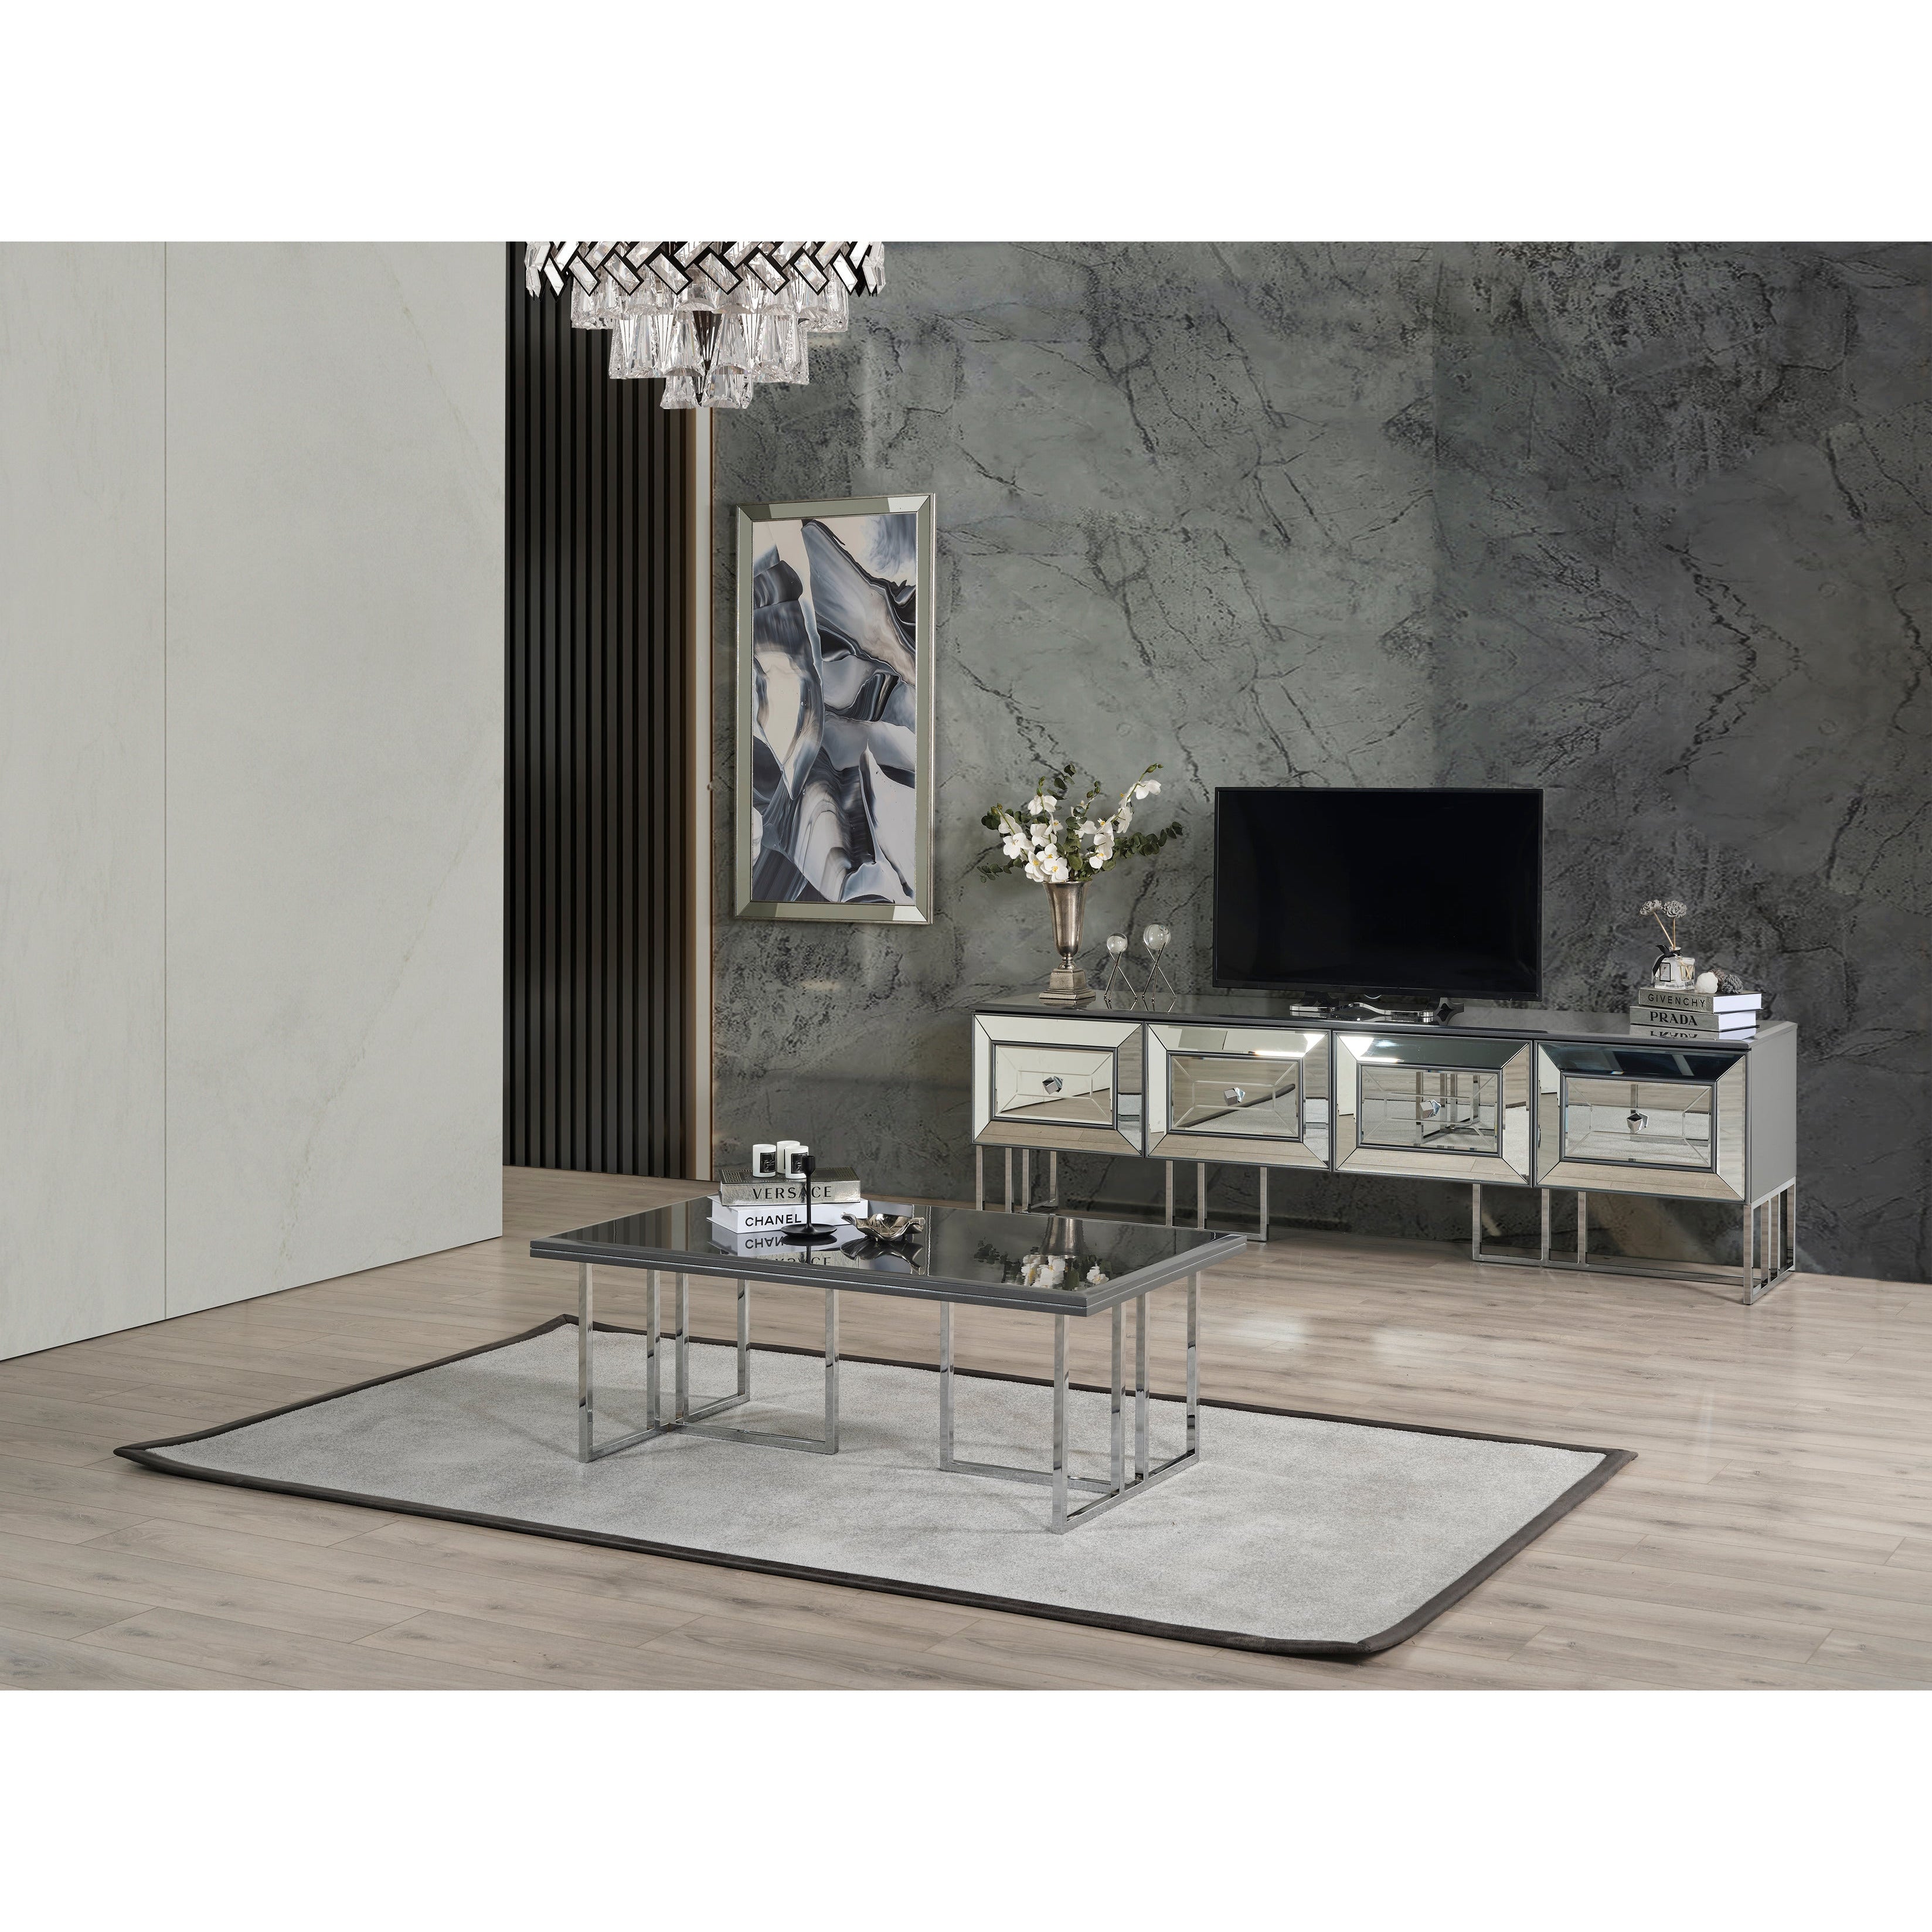 Inci Soffbord - LINE Furniture Group